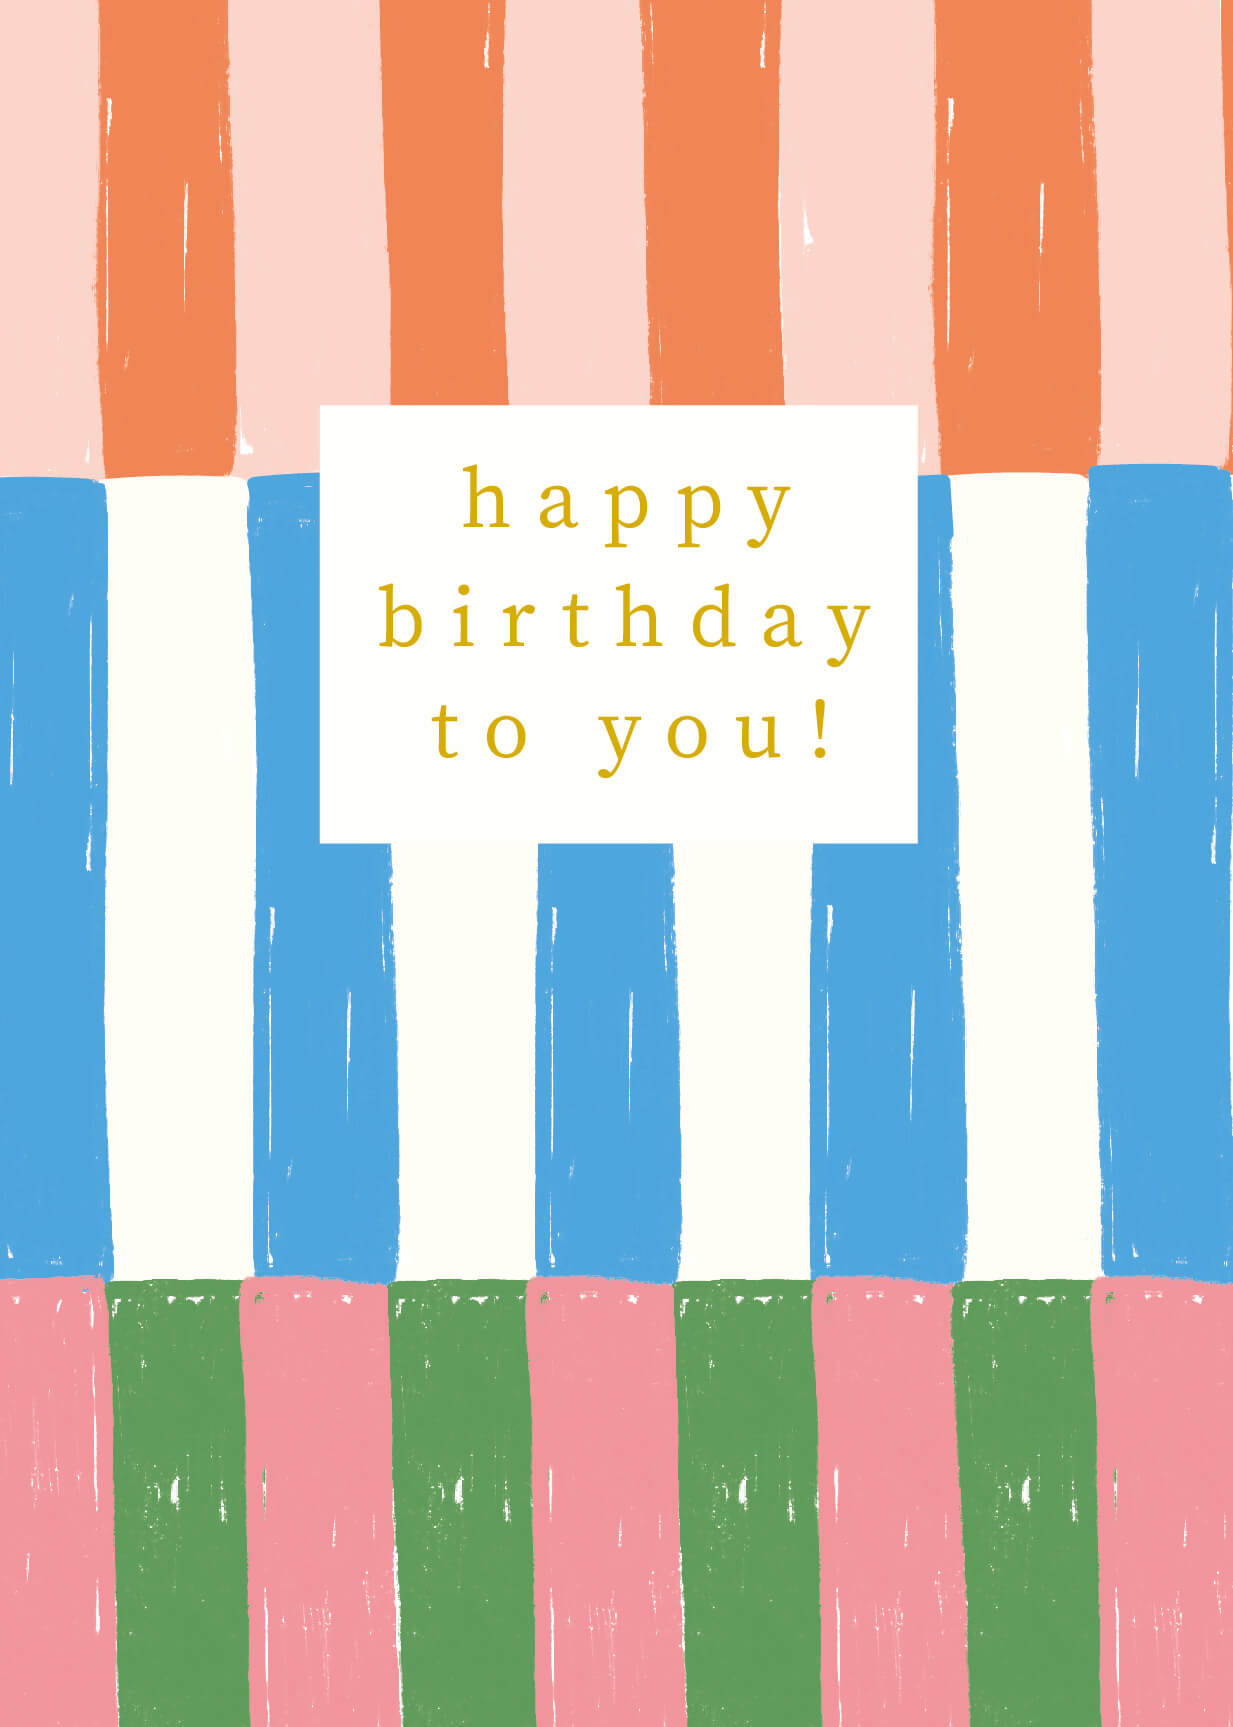 Color Bars Birthday Card